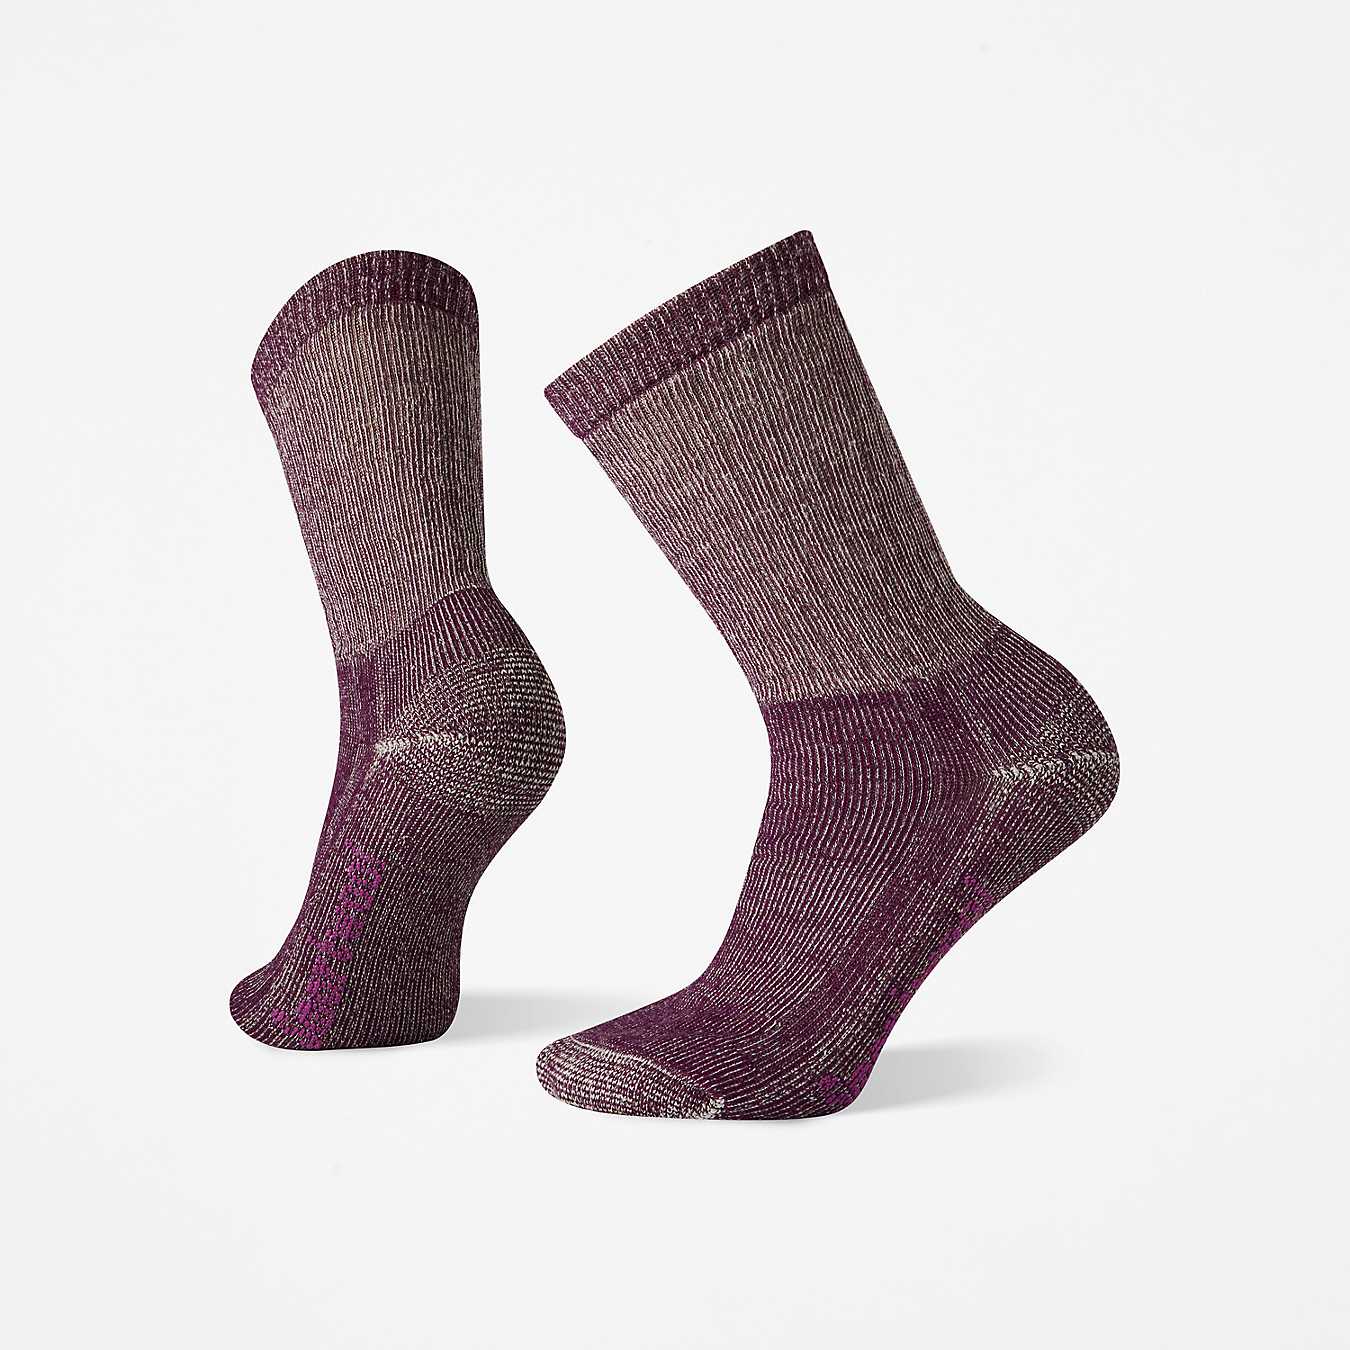 WindRiver Women's Wool Blend Quad Comfort Hiking Crew Socks